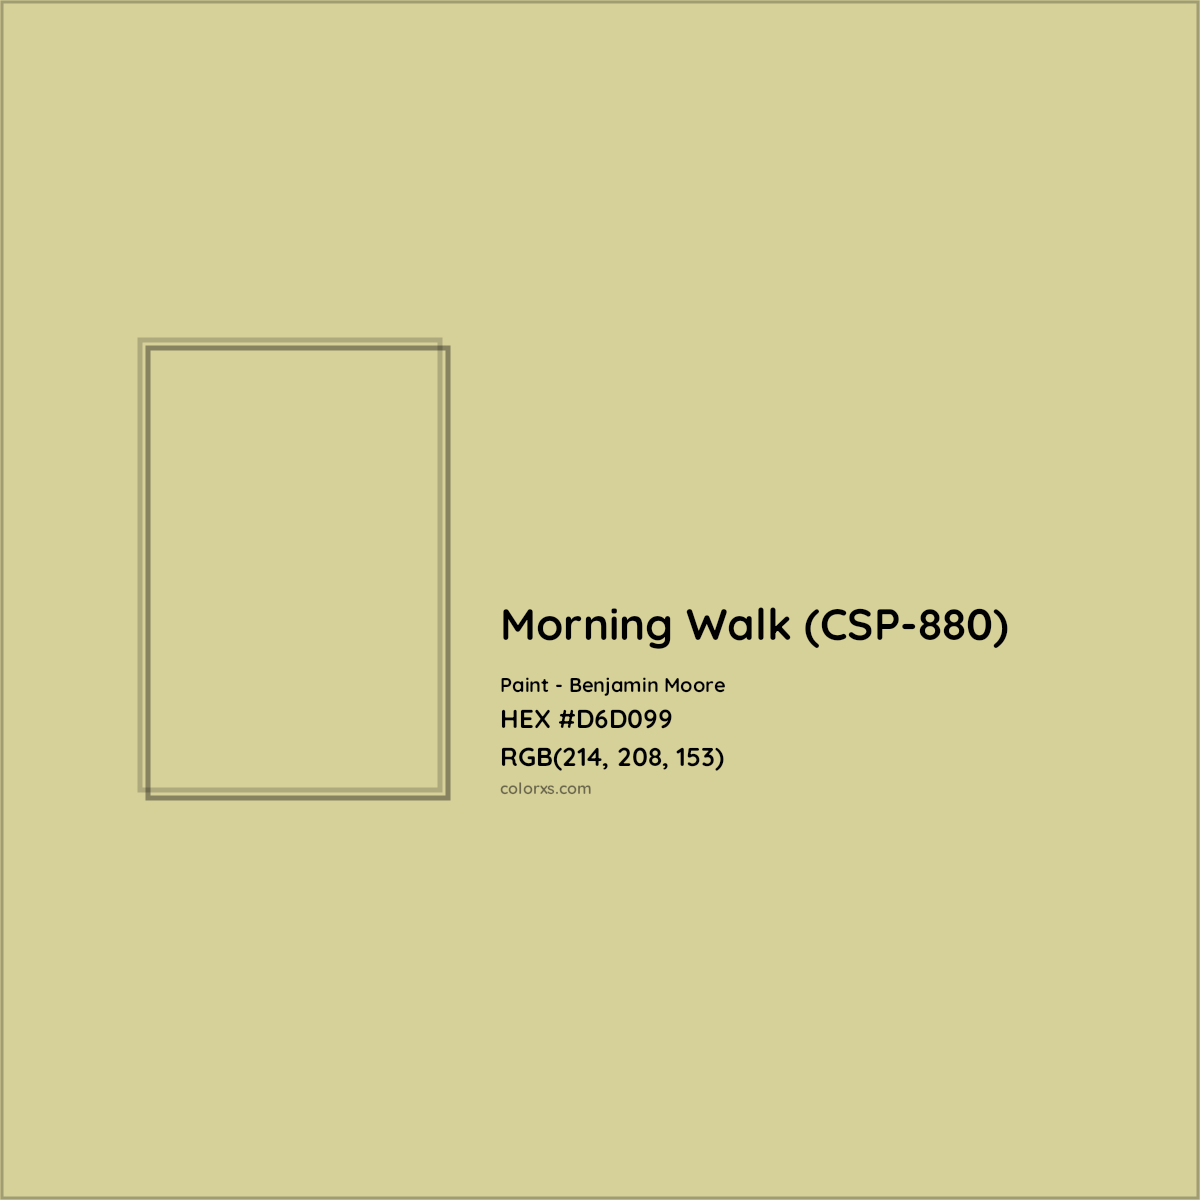 HEX #D6D099 Morning Walk (CSP-880) Paint Benjamin Moore - Color Code